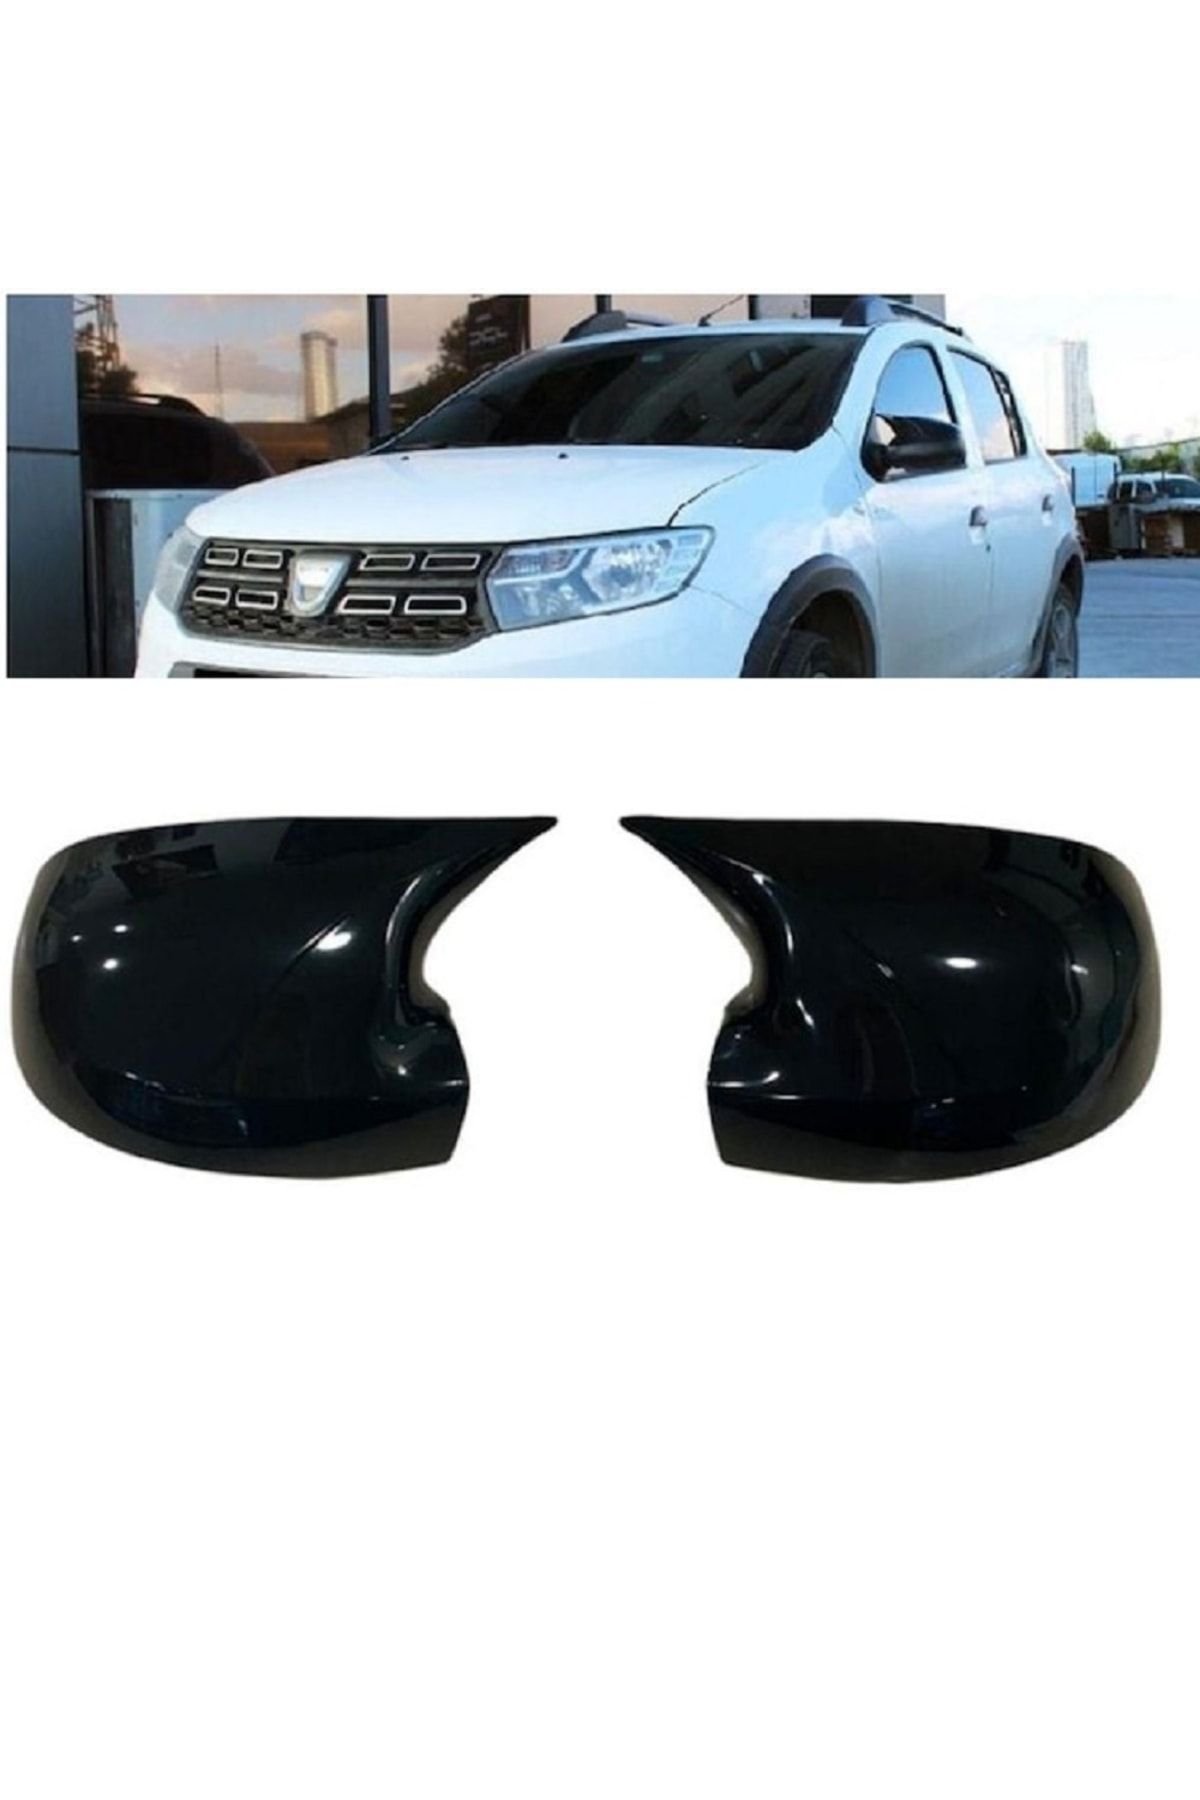 X POWER TUNİNG Dacia Sandero 2009-2020 Compatible Glossy Black Batman Mirror  Cover - Trendyol